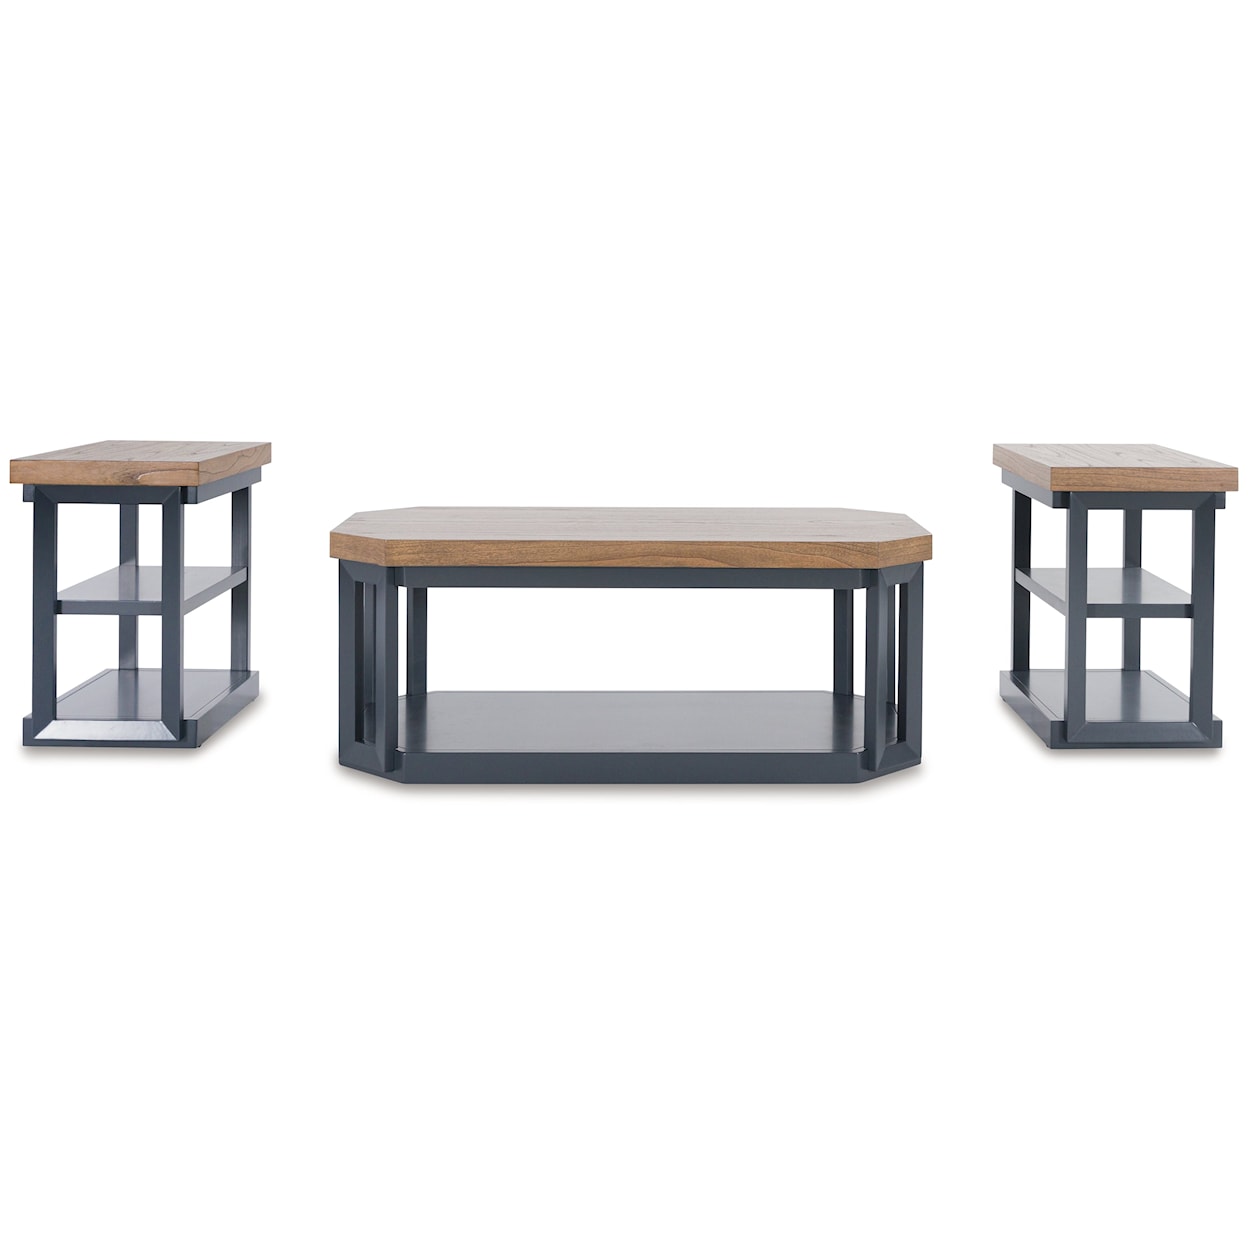 Benchcraft Landocken Occasional Table Set (Set of 3)